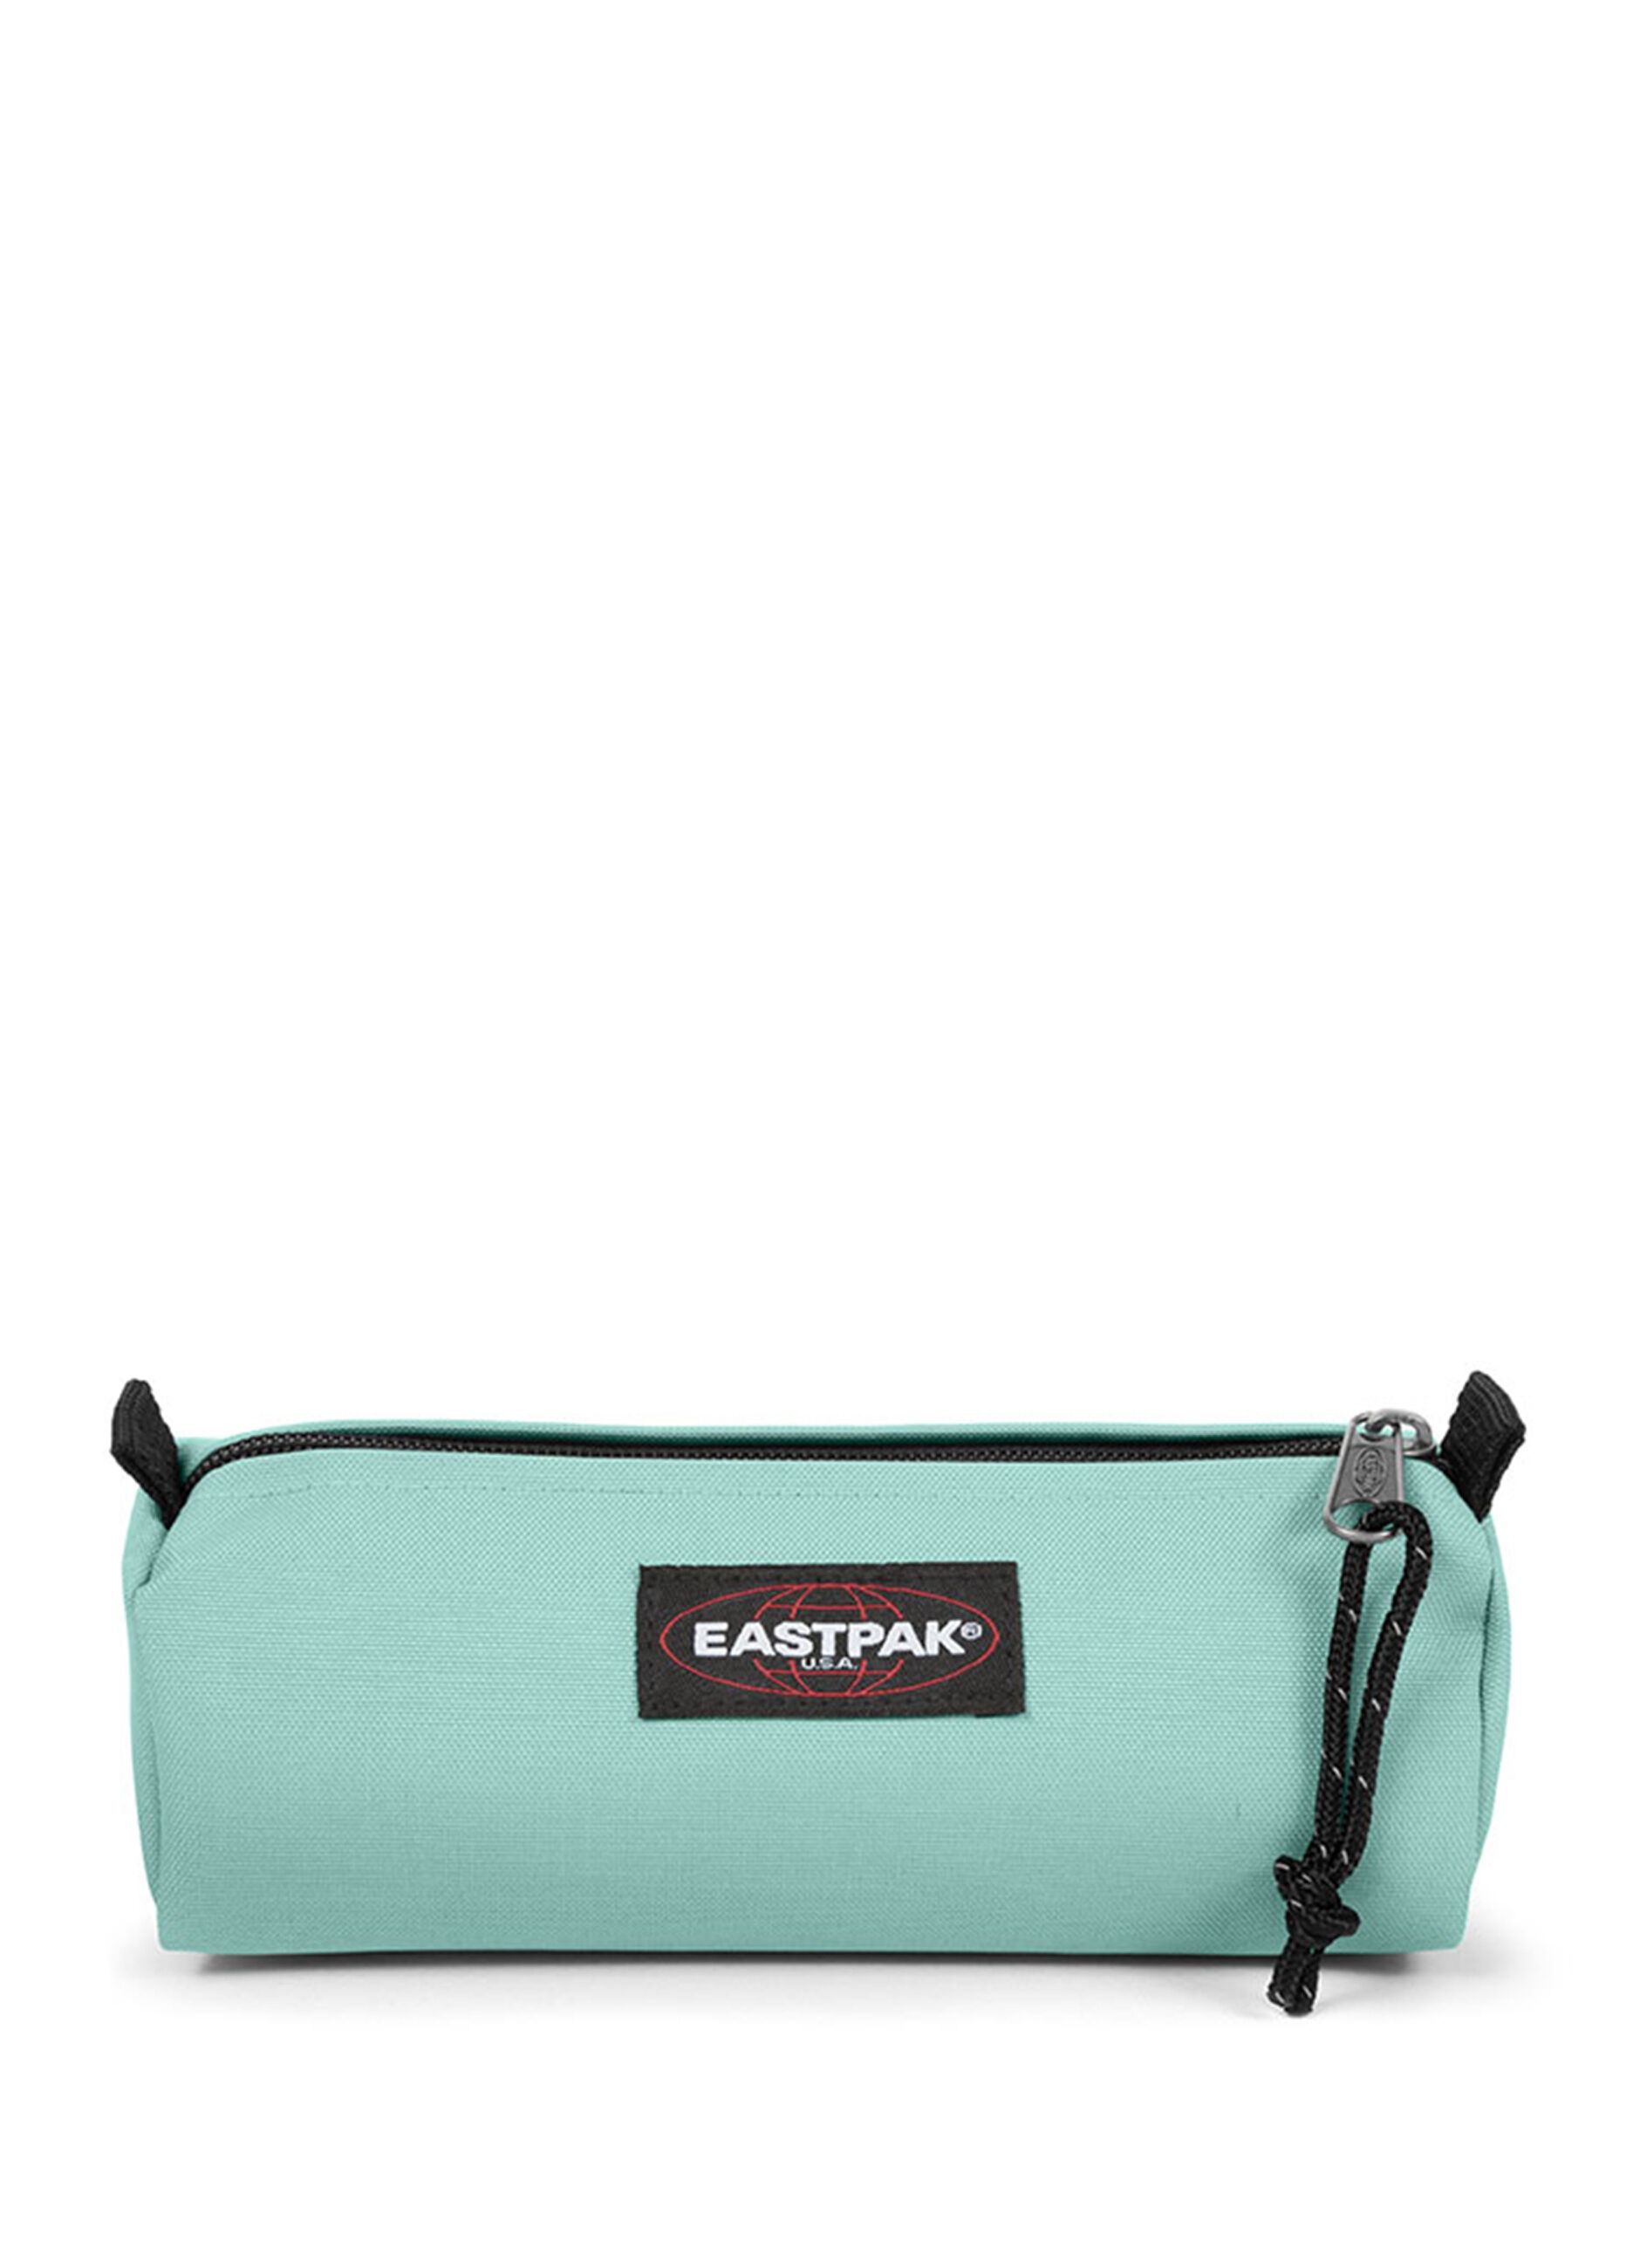 Eastpak Benchmark Single pencil case